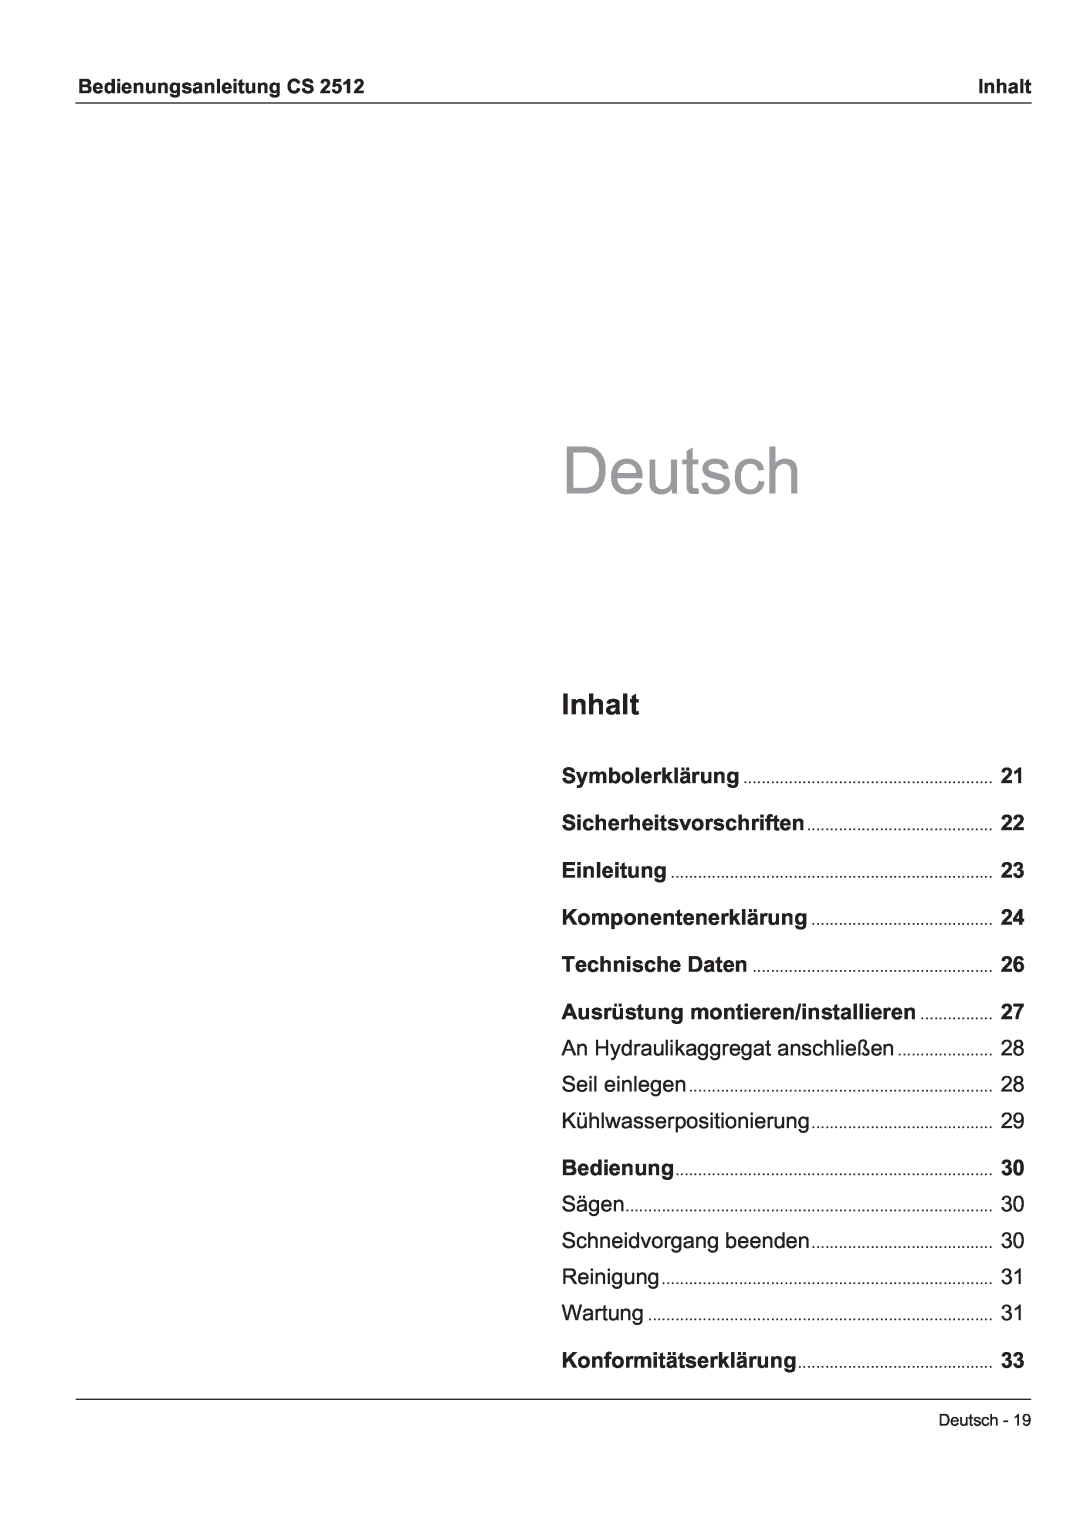 Husqvarna CS 2512 manual Deutsch, Inhalt 